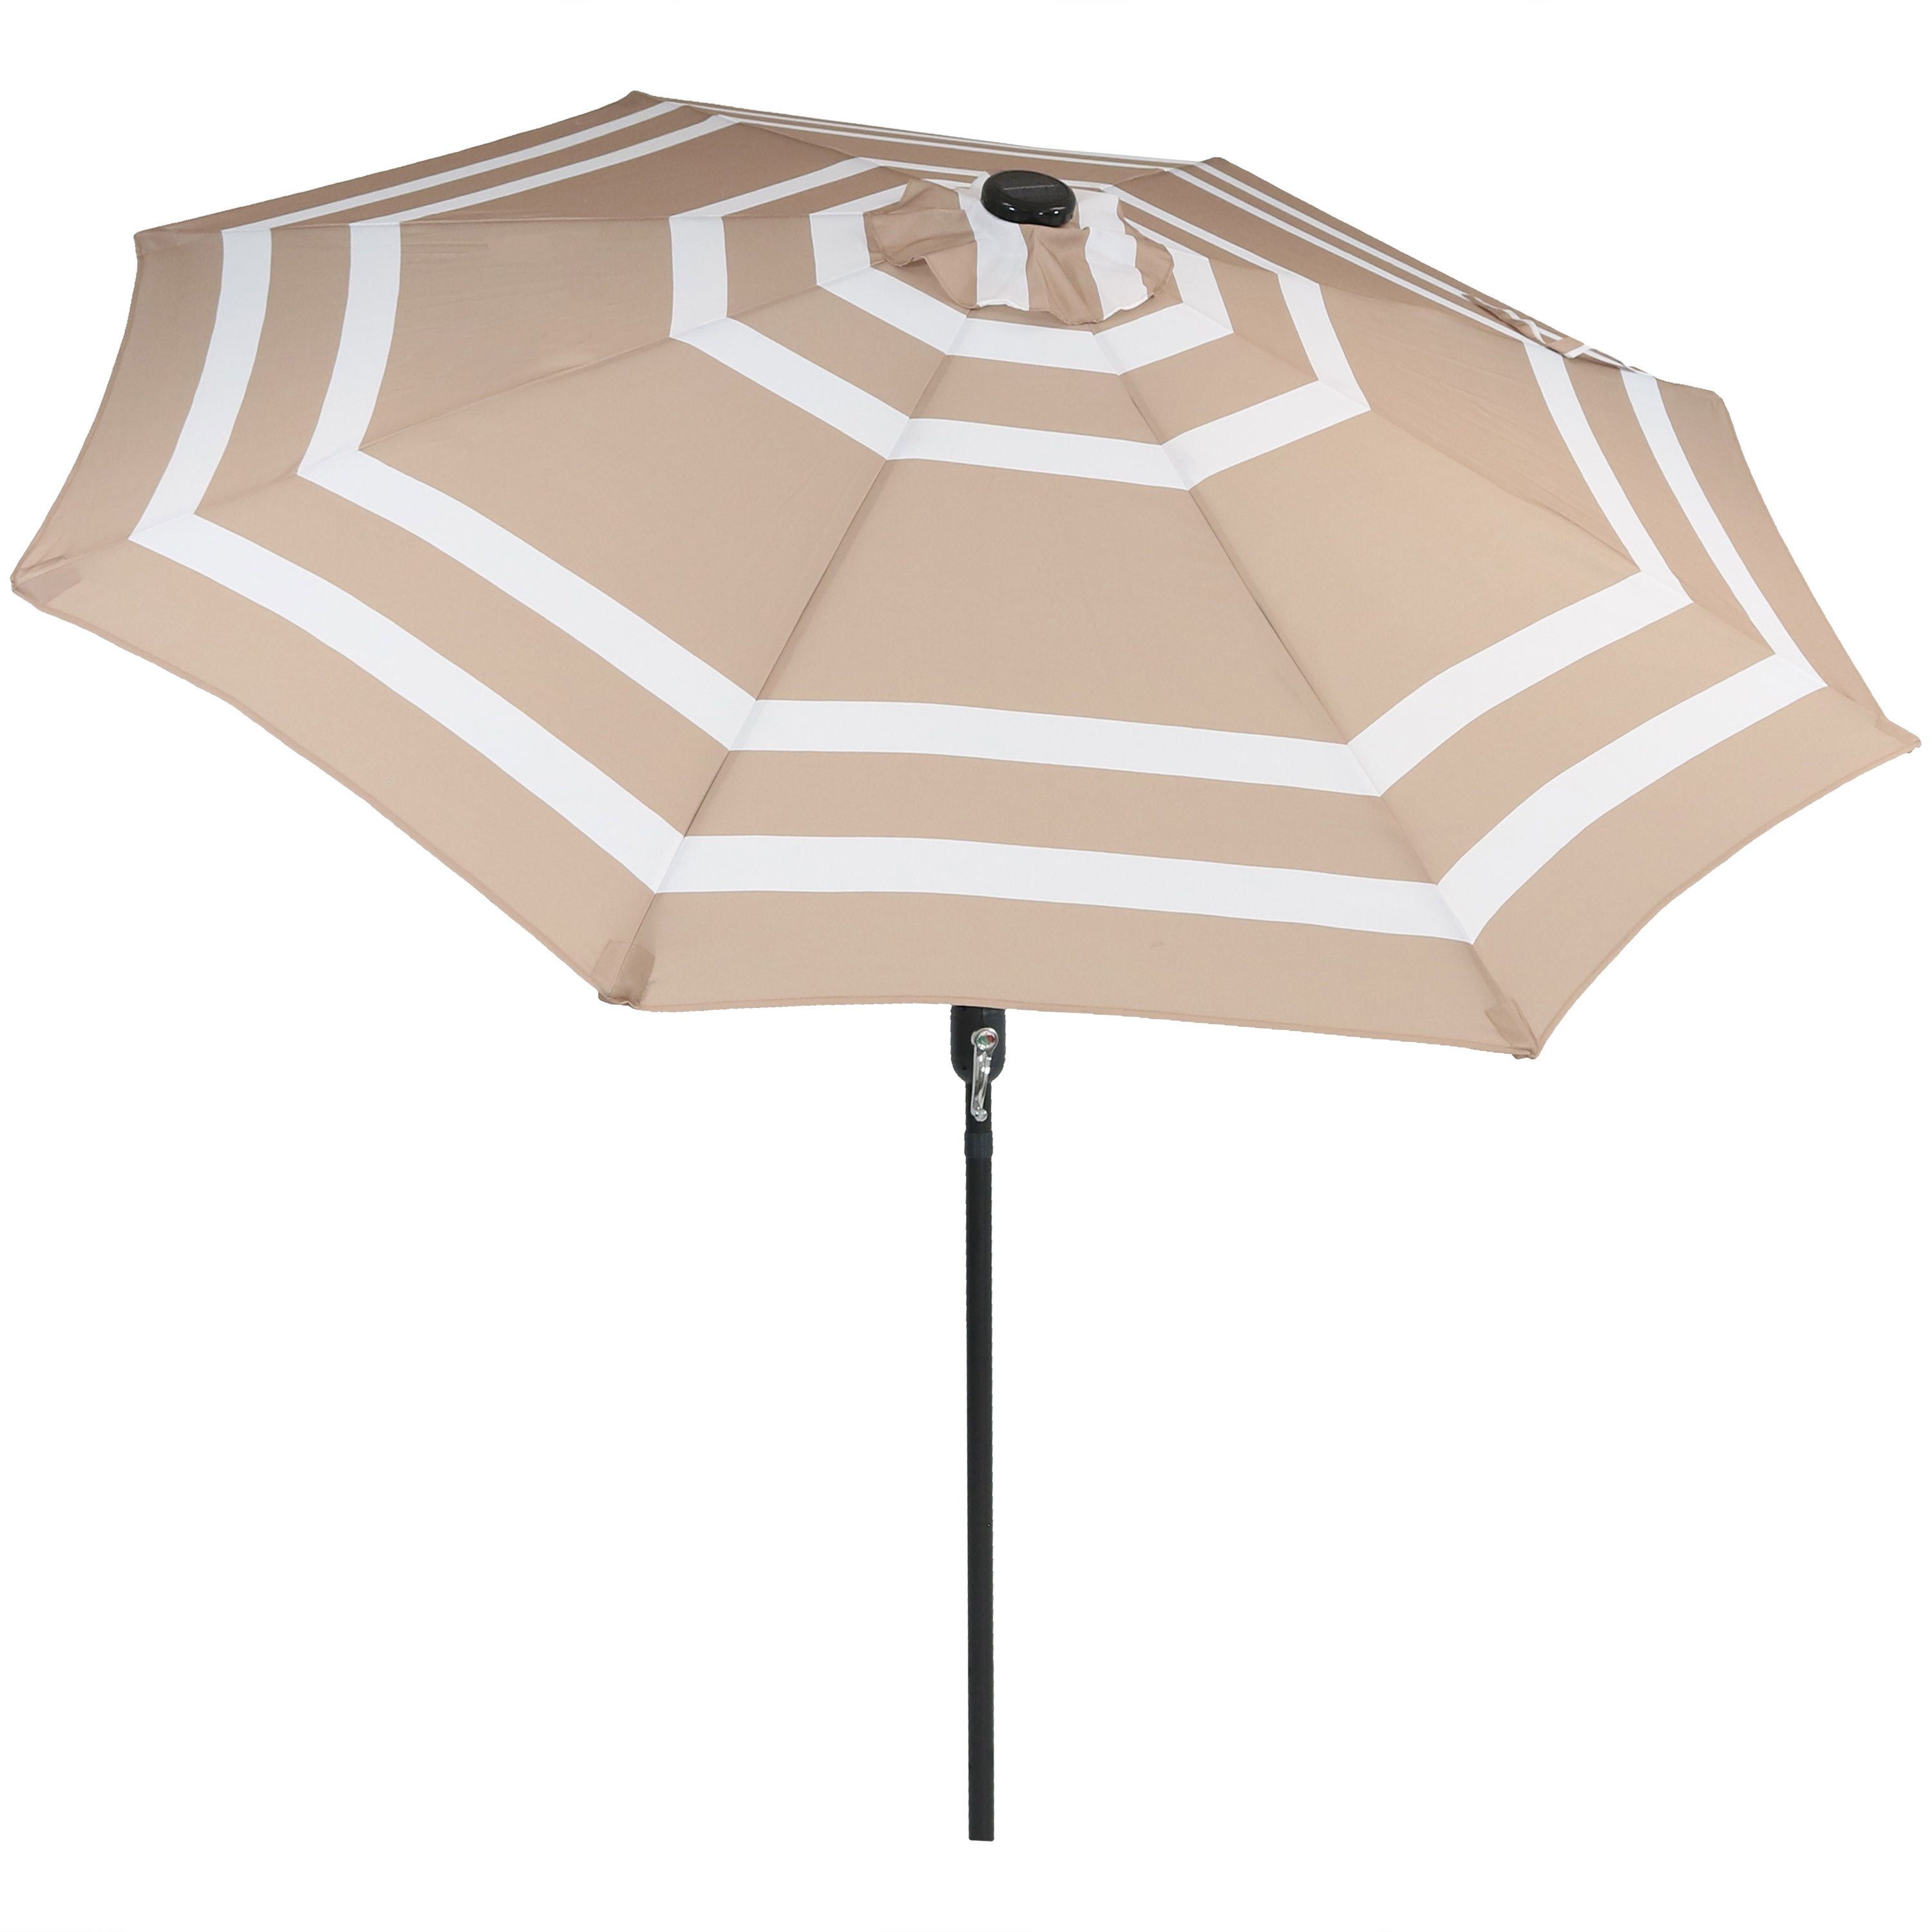 Docia 9' Market Umbrella With Regard To Most Popular Docia Market Umbrellas (View 1 of 20)